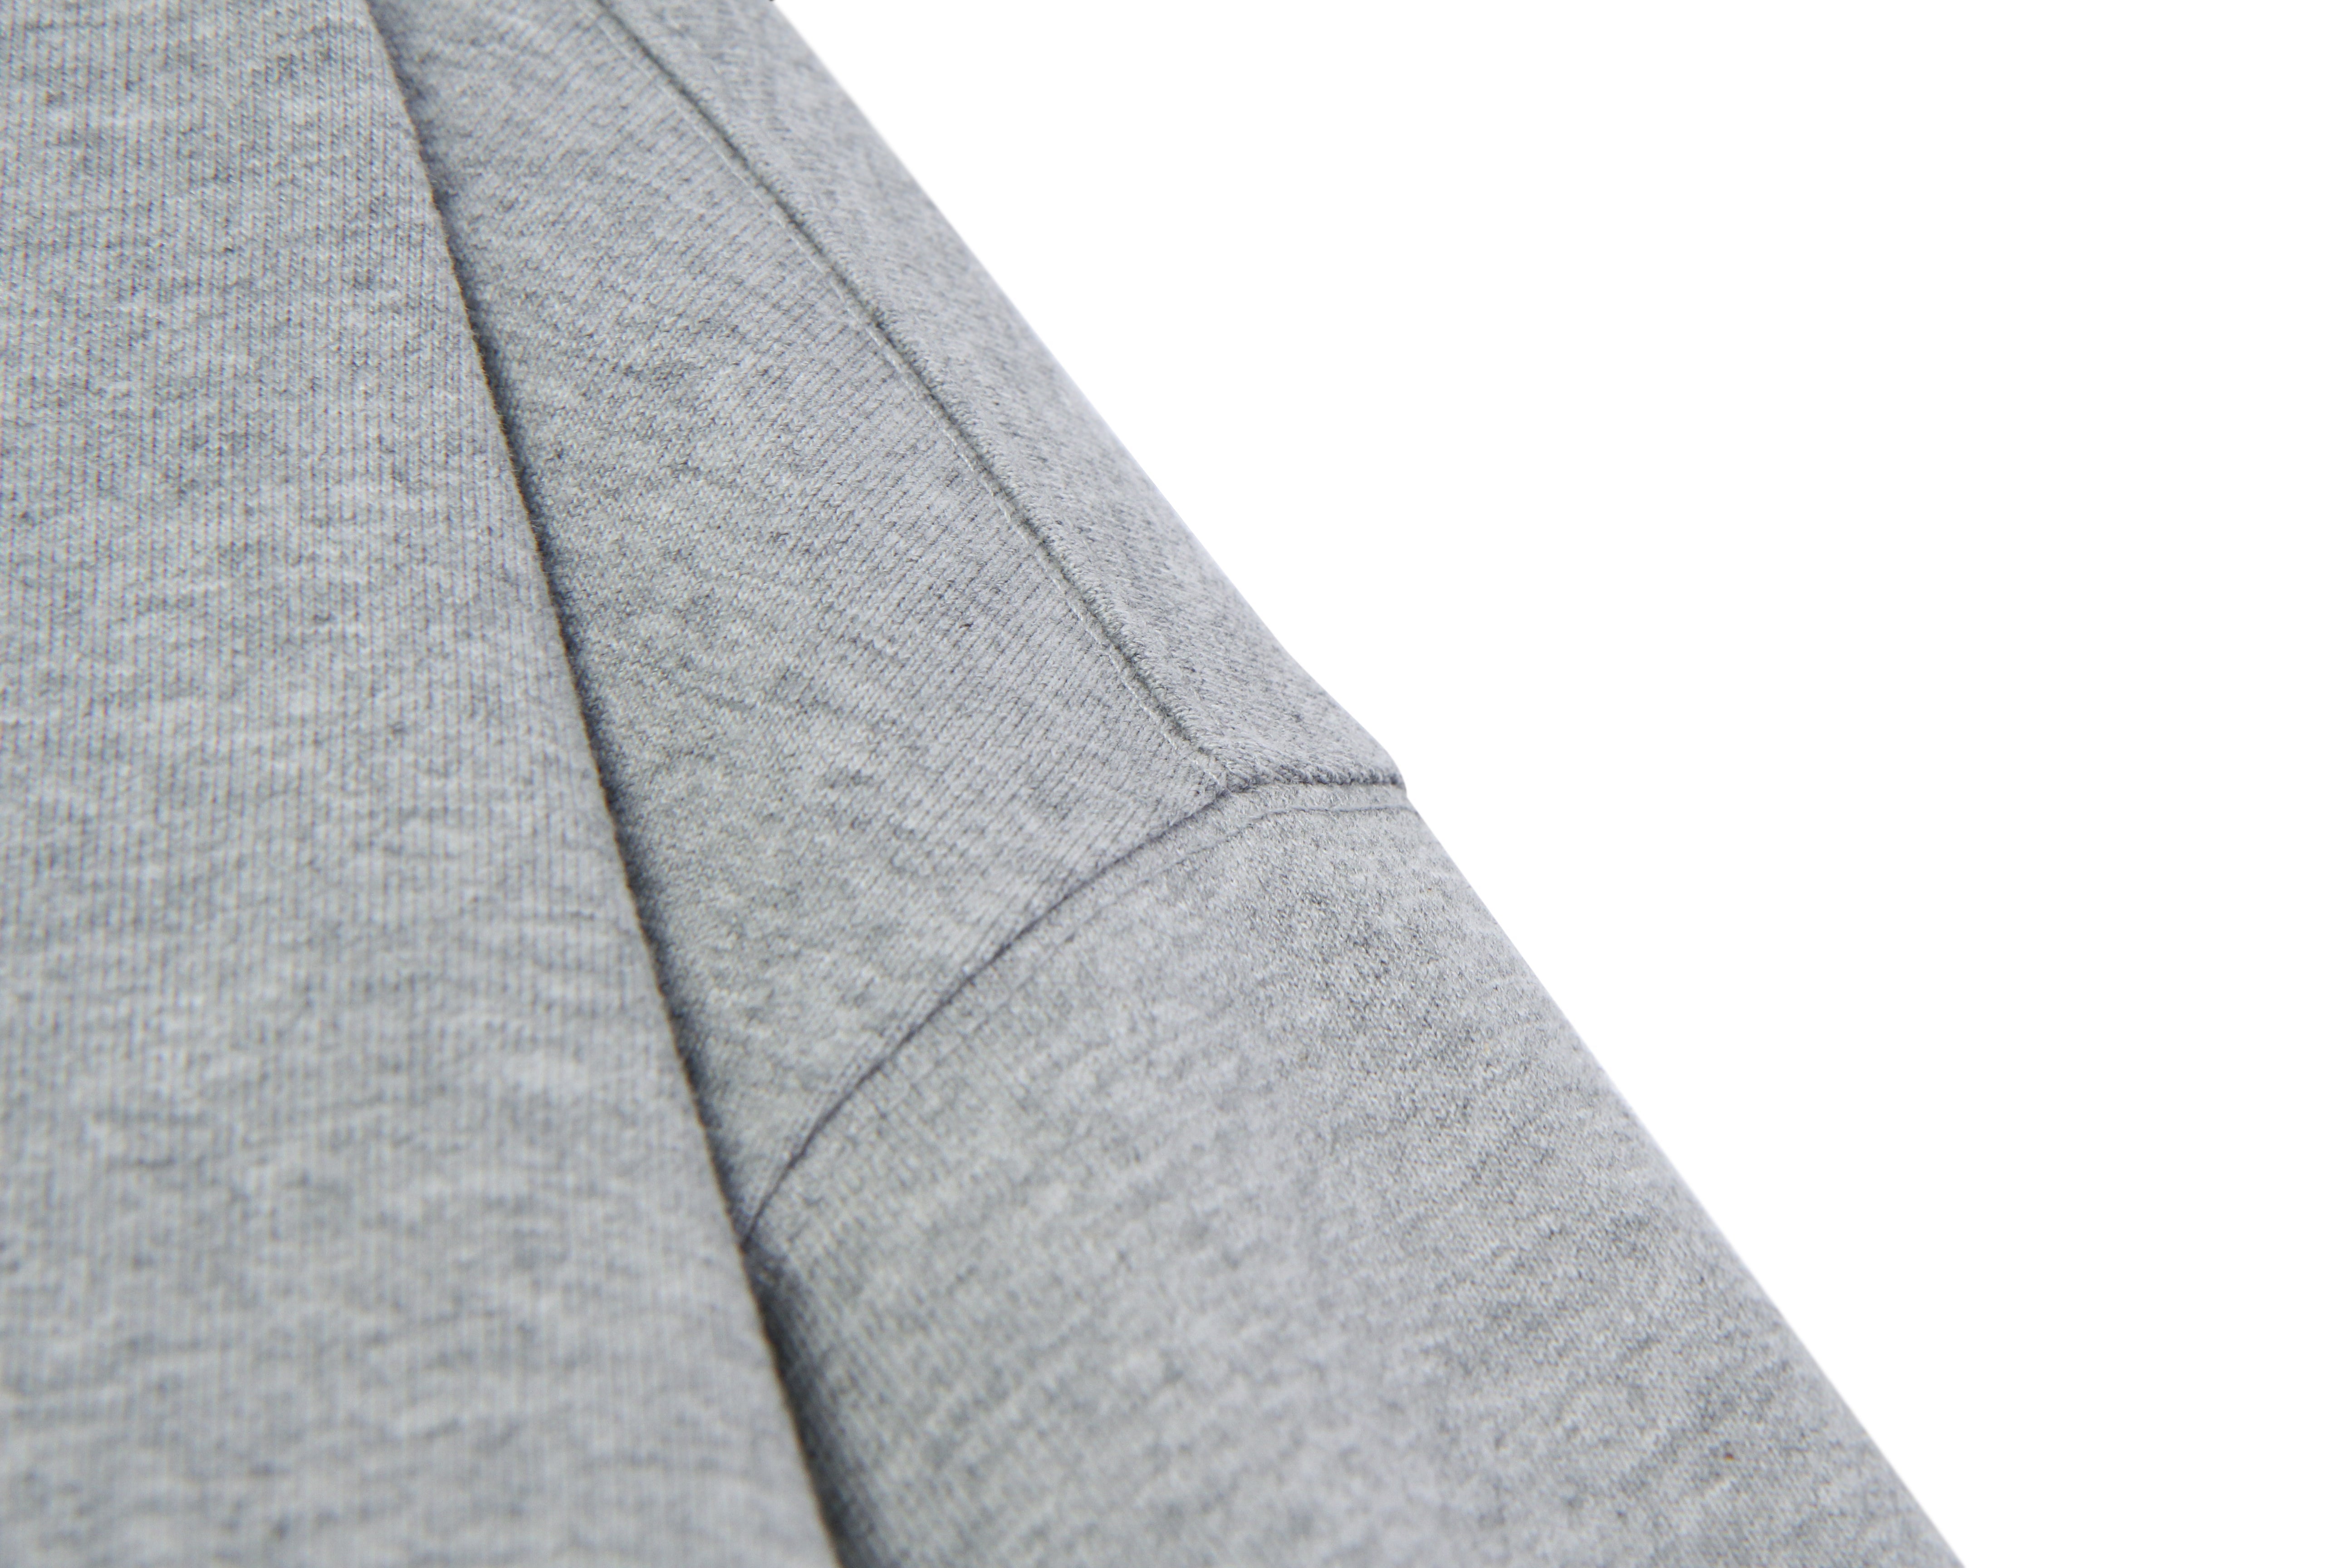 Sleeve Contrast Sweatshirt T60 Melange Gray